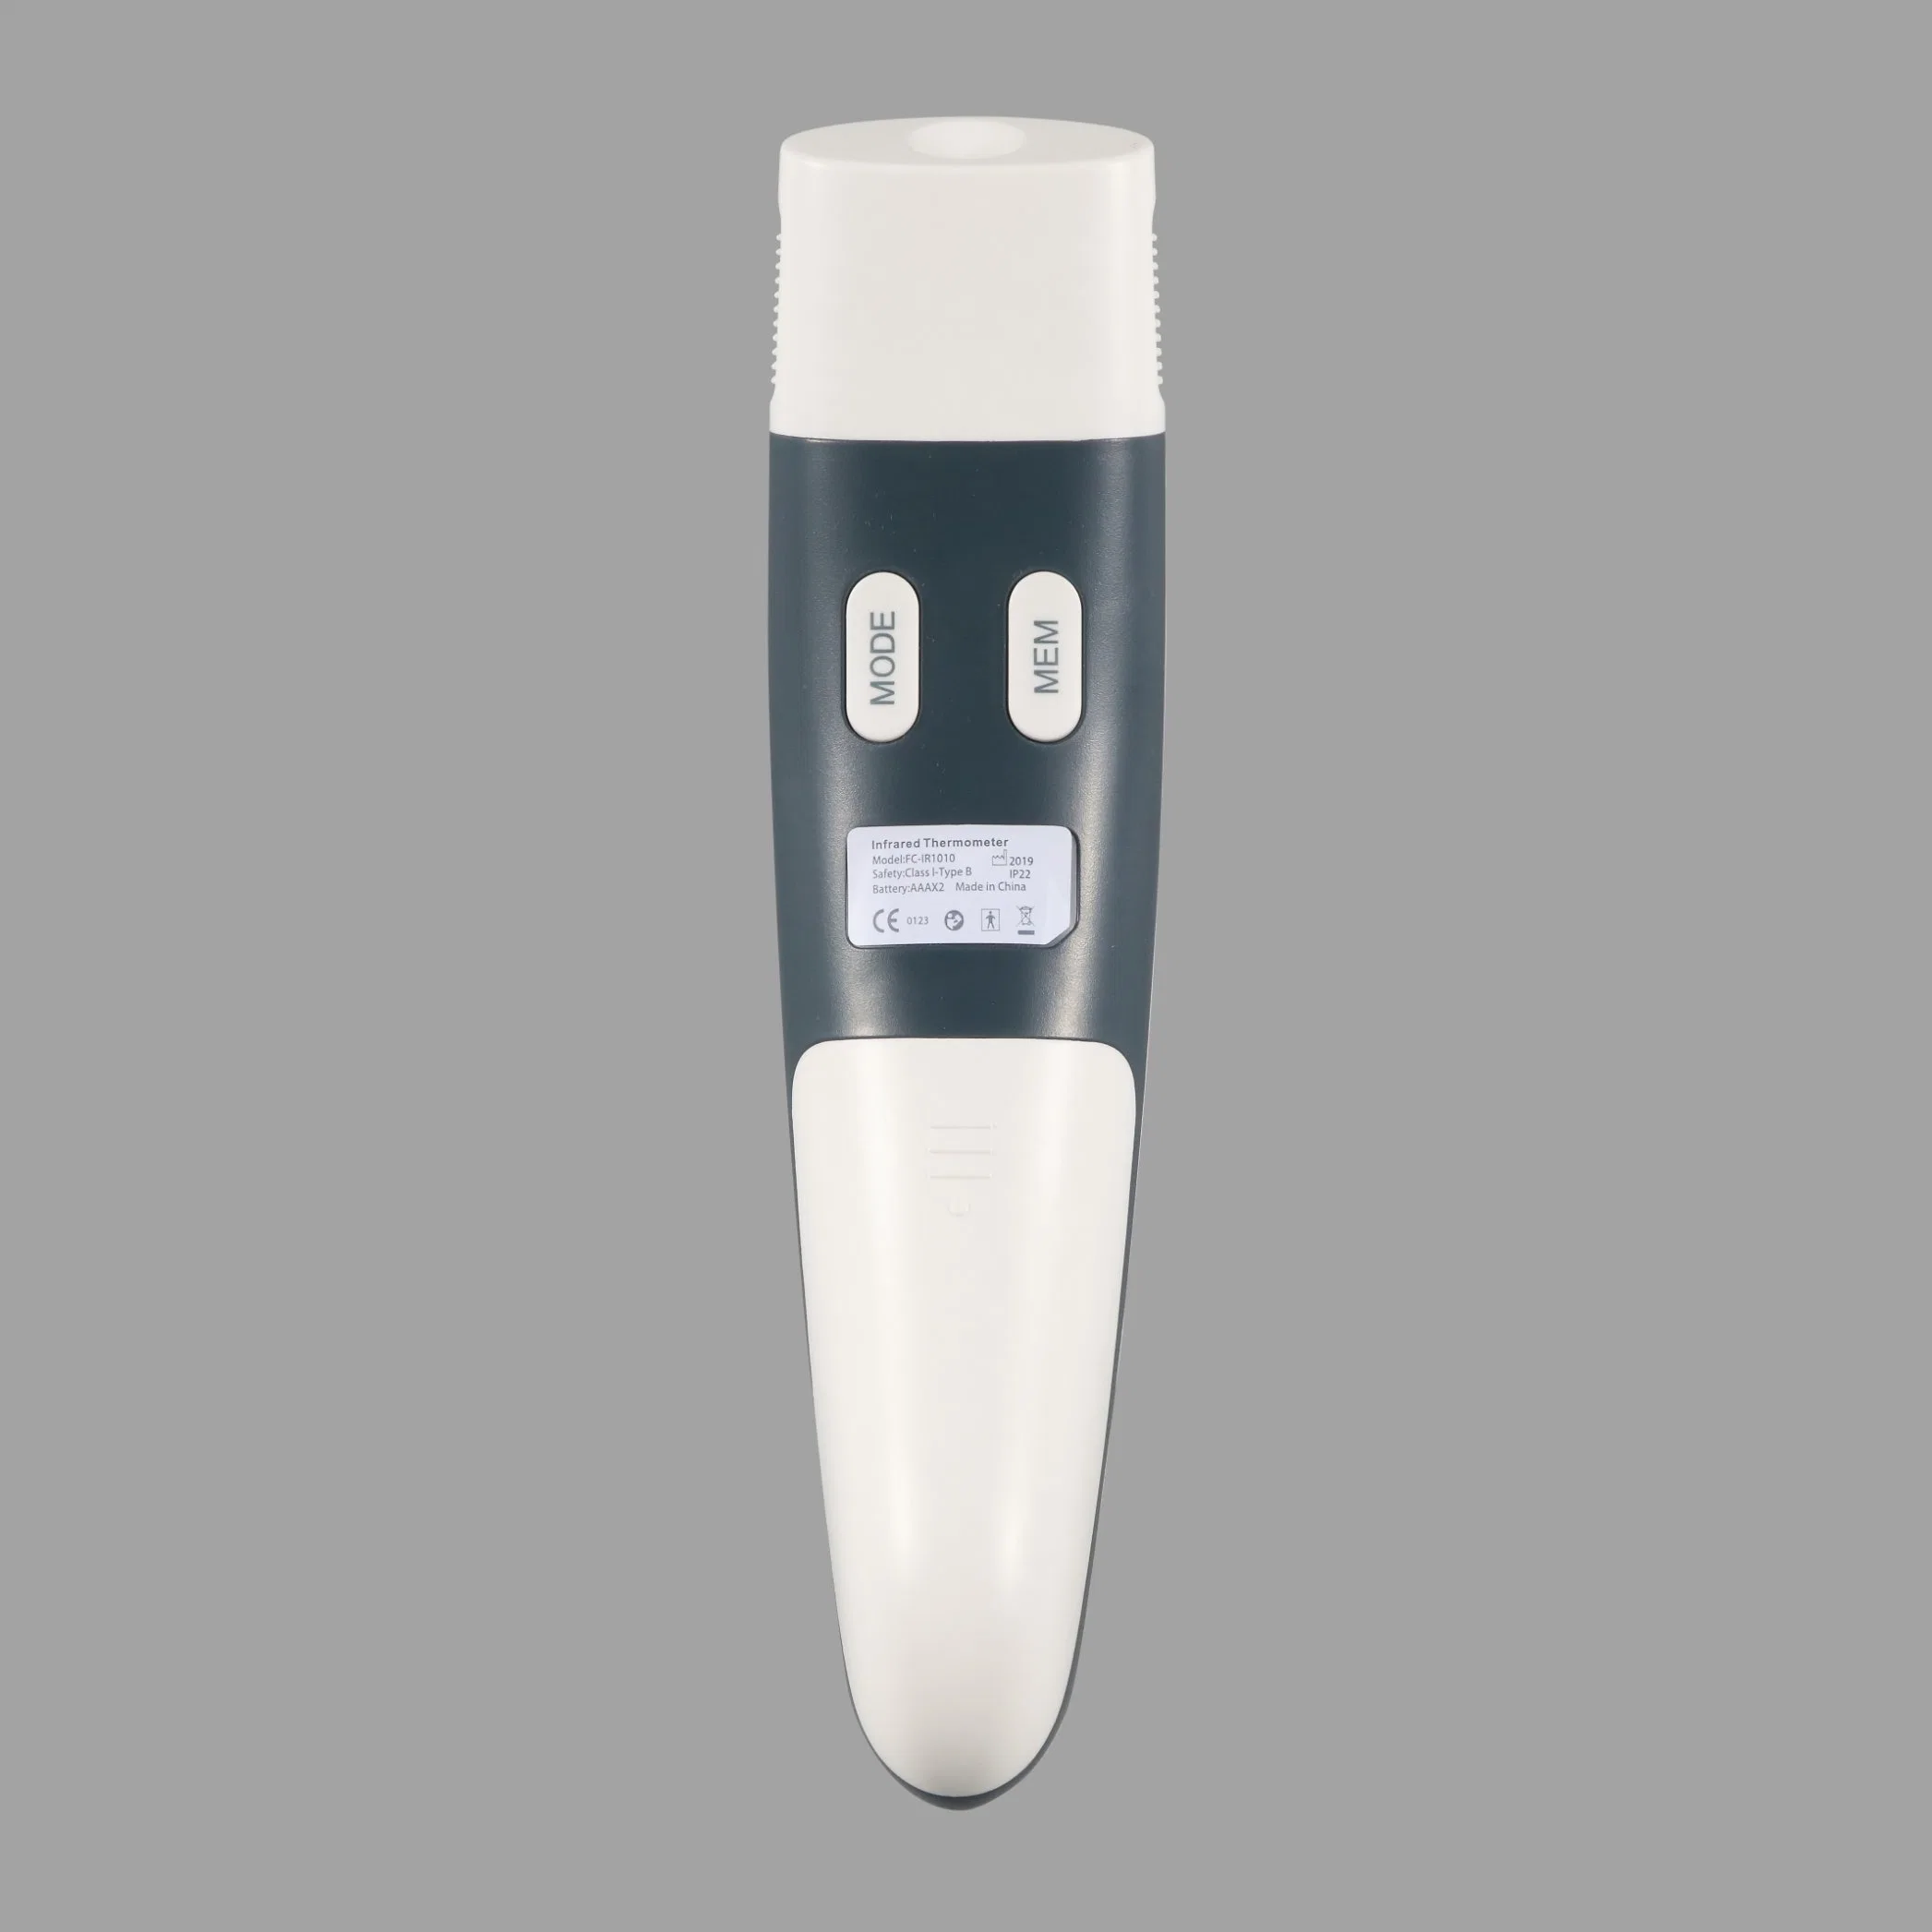 Temperature Sensitive Digital Thermometer Measuring Gun for Epidemic Prevention